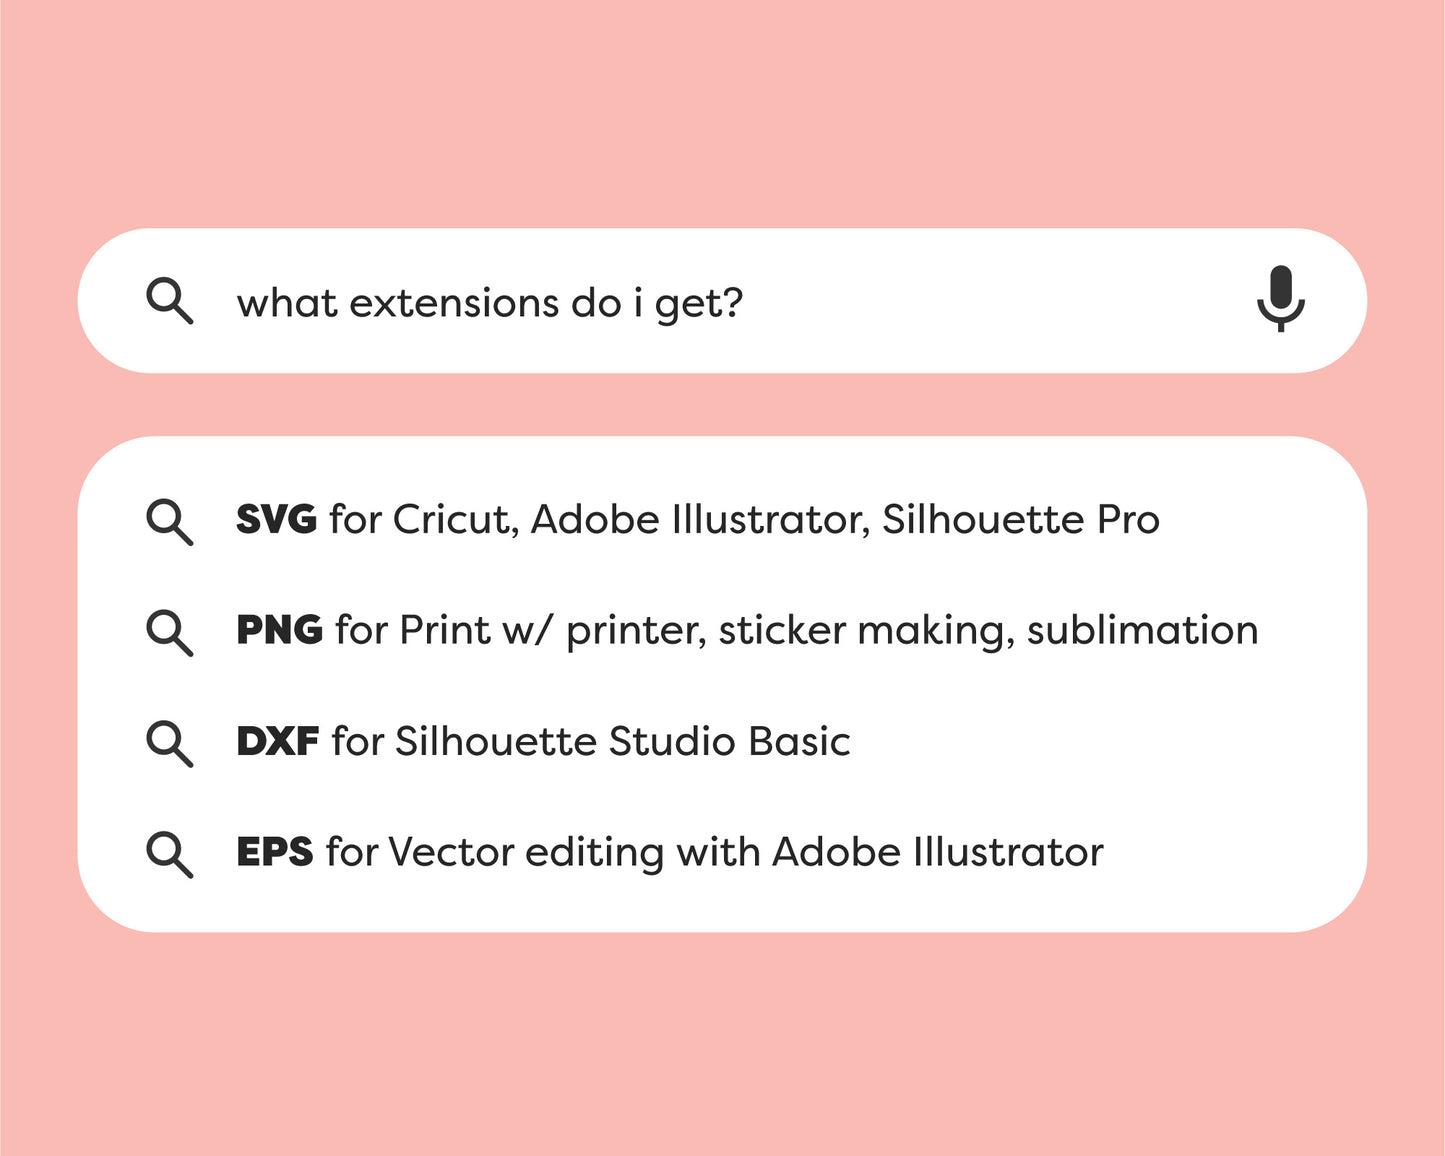 Bookmark Template SVG | Colorful Retro Daisy SVG